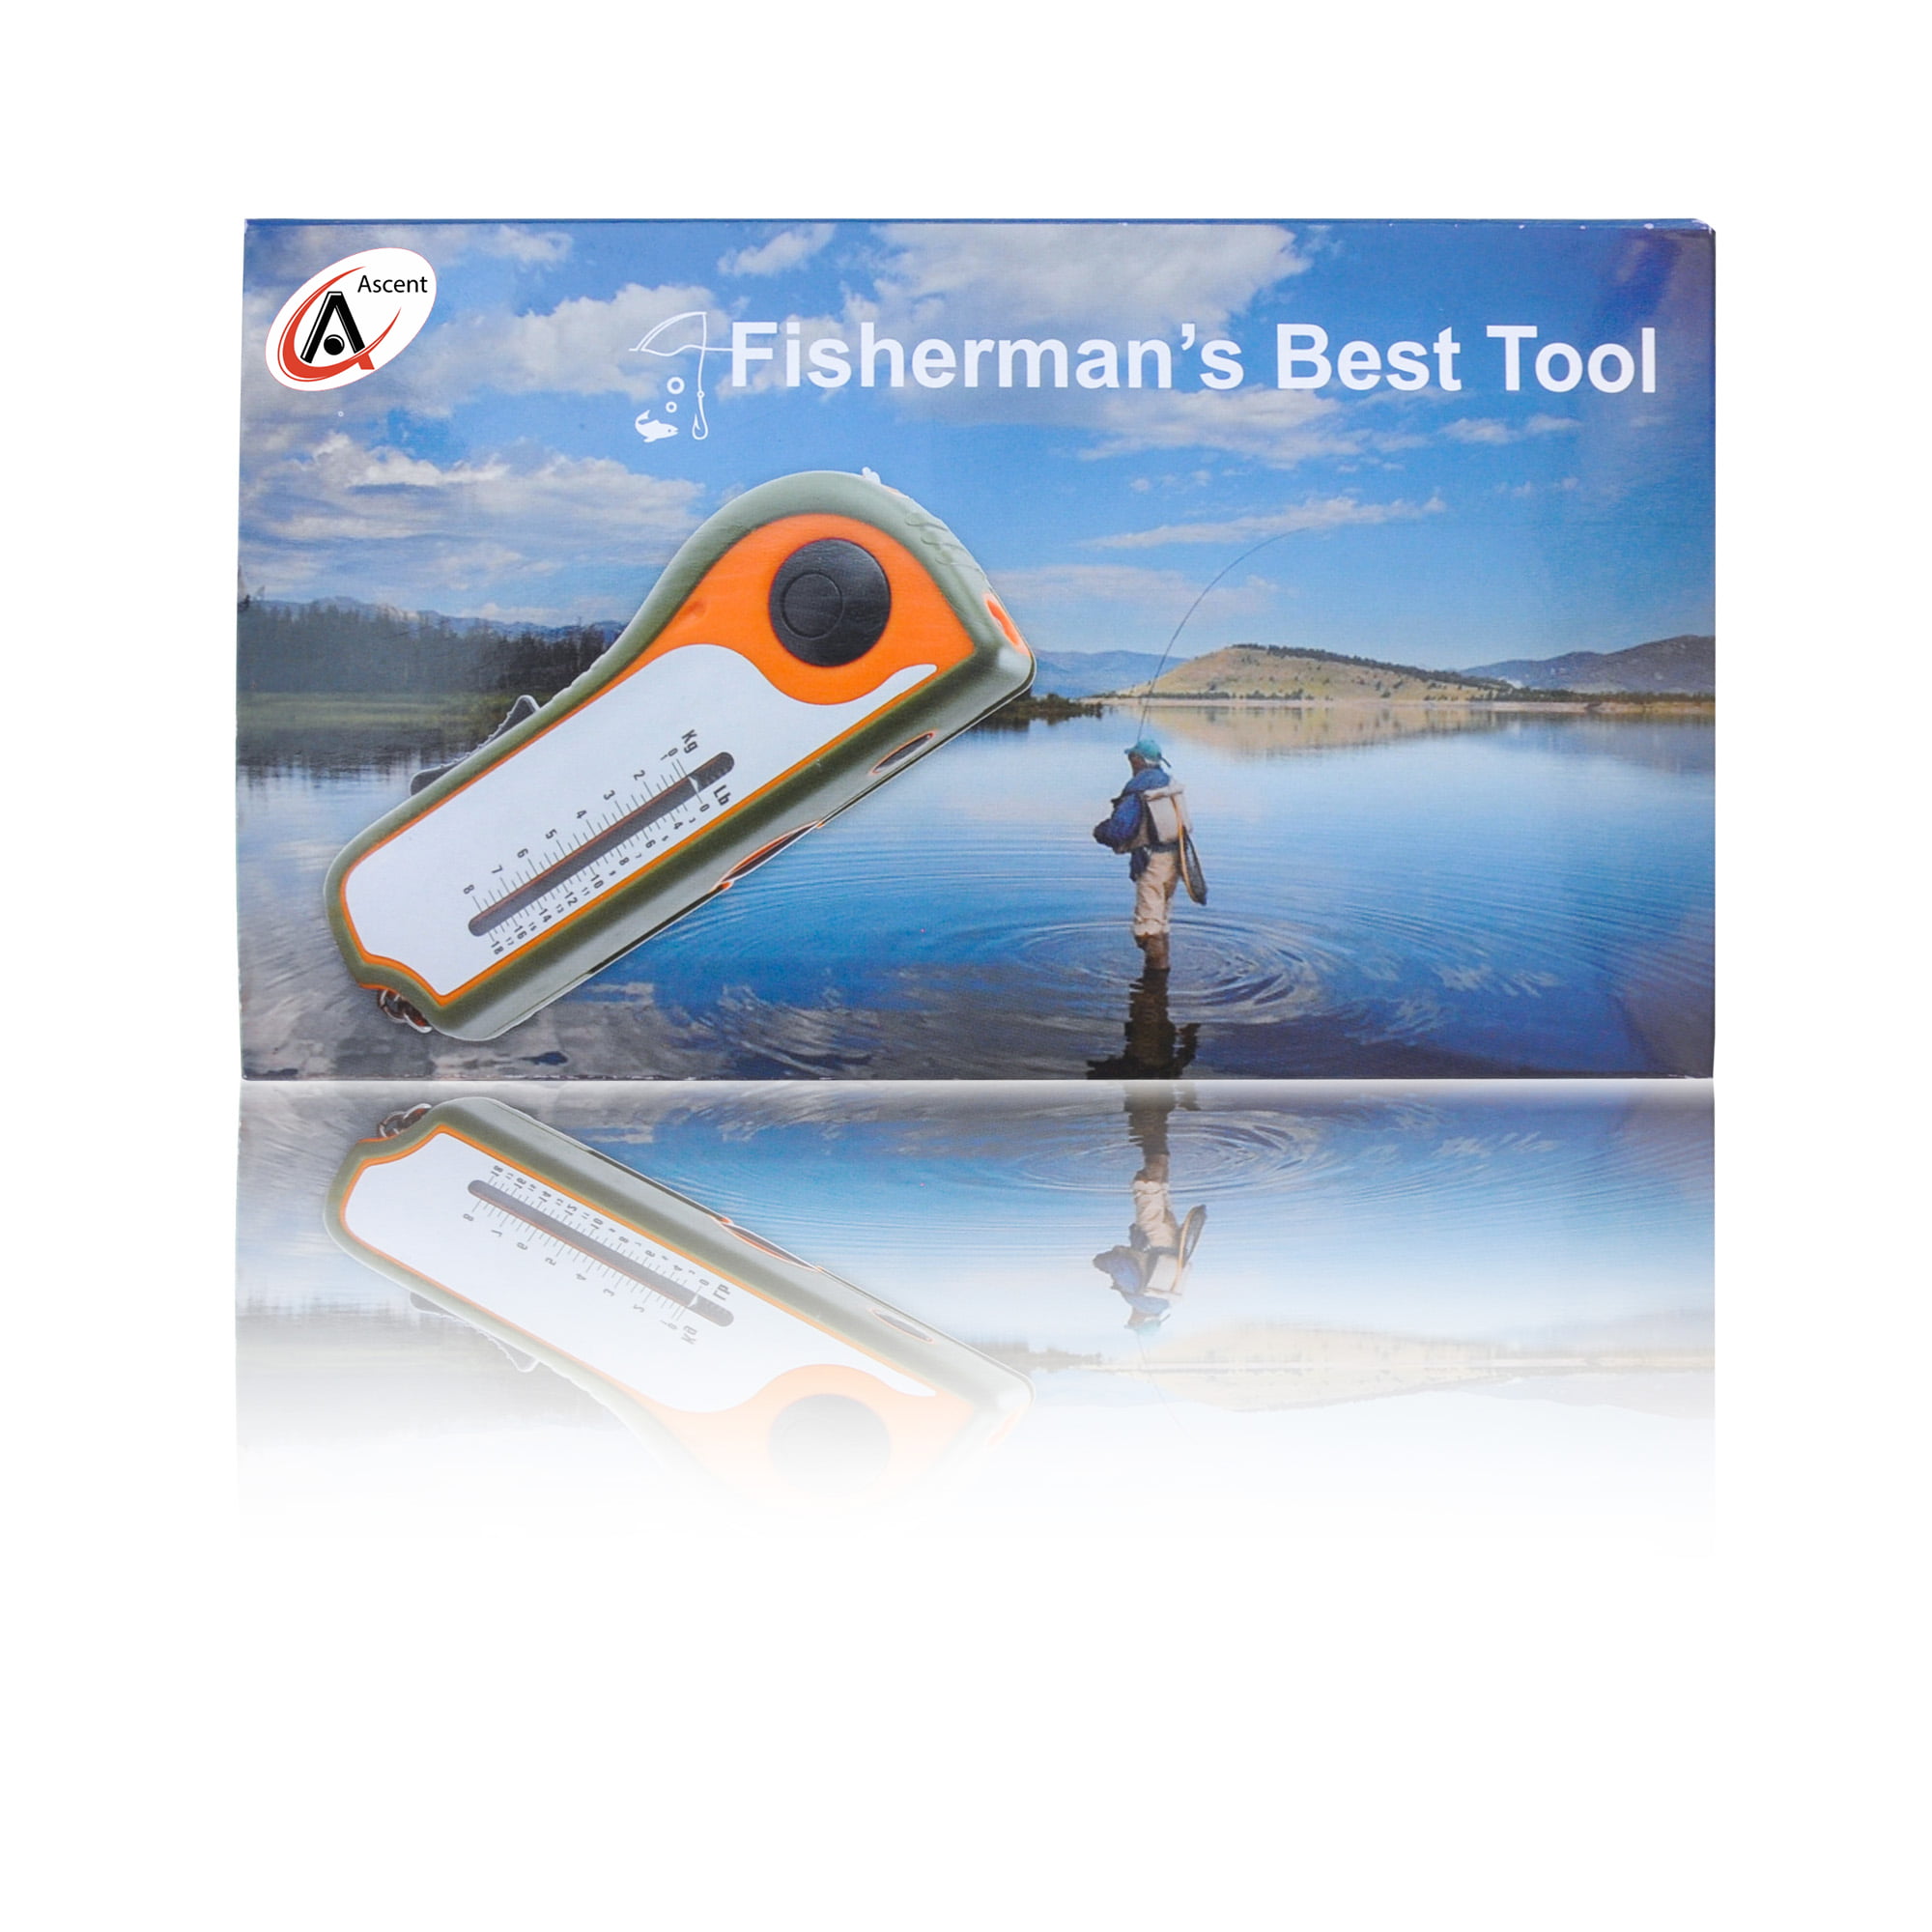 Ascent Fisherman Gift Tool Fishing Multitool - Hook Remover, Scale Scraper,  Tape Measure, Bait Cutter, Flashlight, Knife, Scissors, Weight Scale,  Bottle Opener, Gift Idea for Men Women Kids 